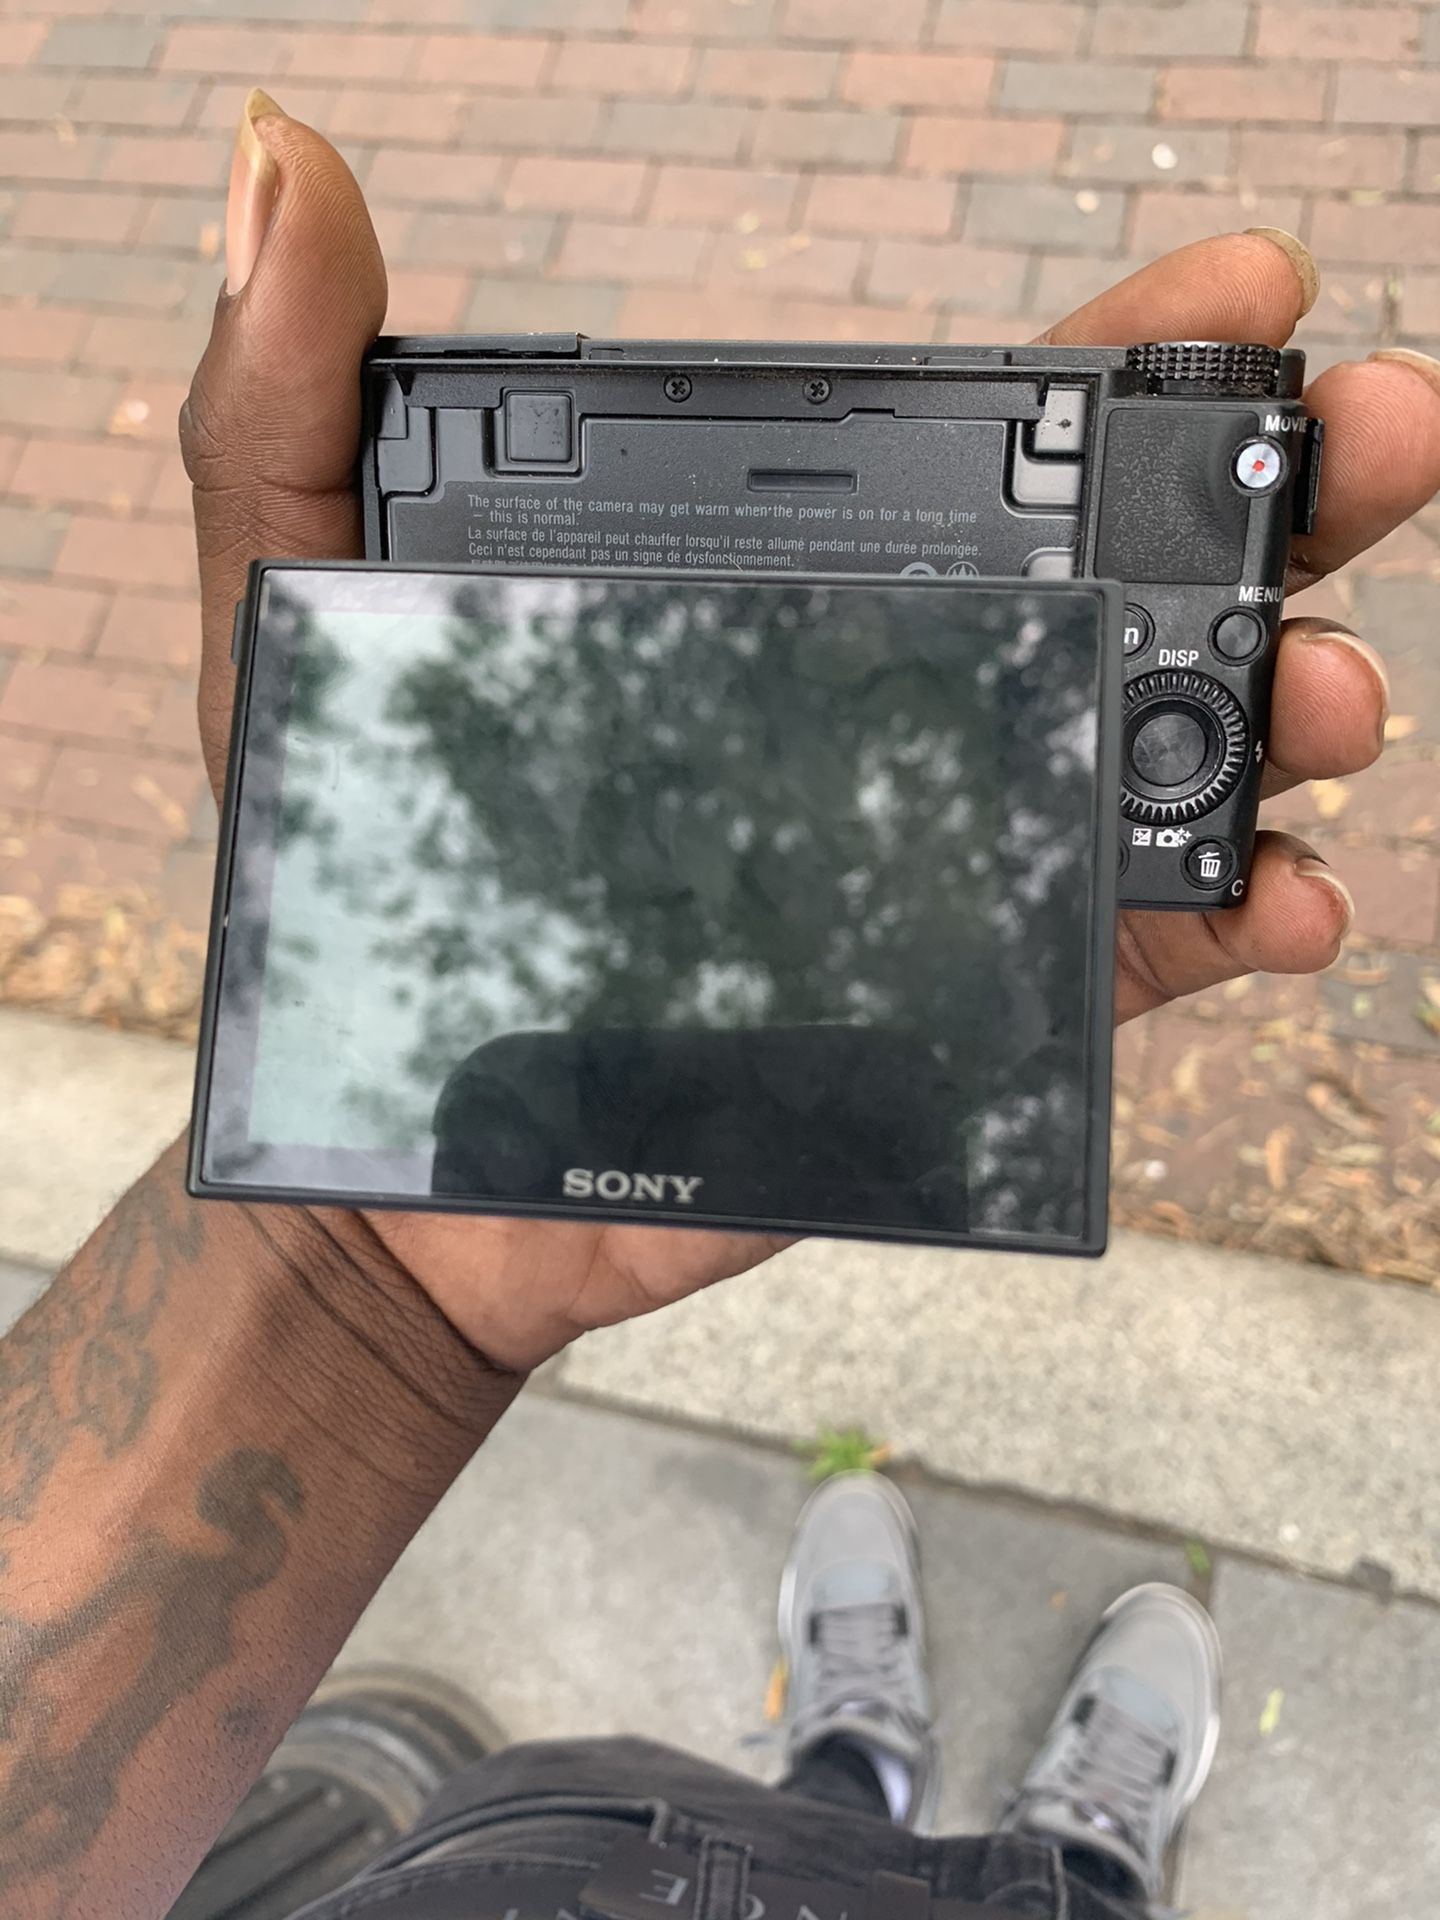 Sony - Cyber-shot DSC-RX100 V 20.1-Megapixel Digital Camera - Black